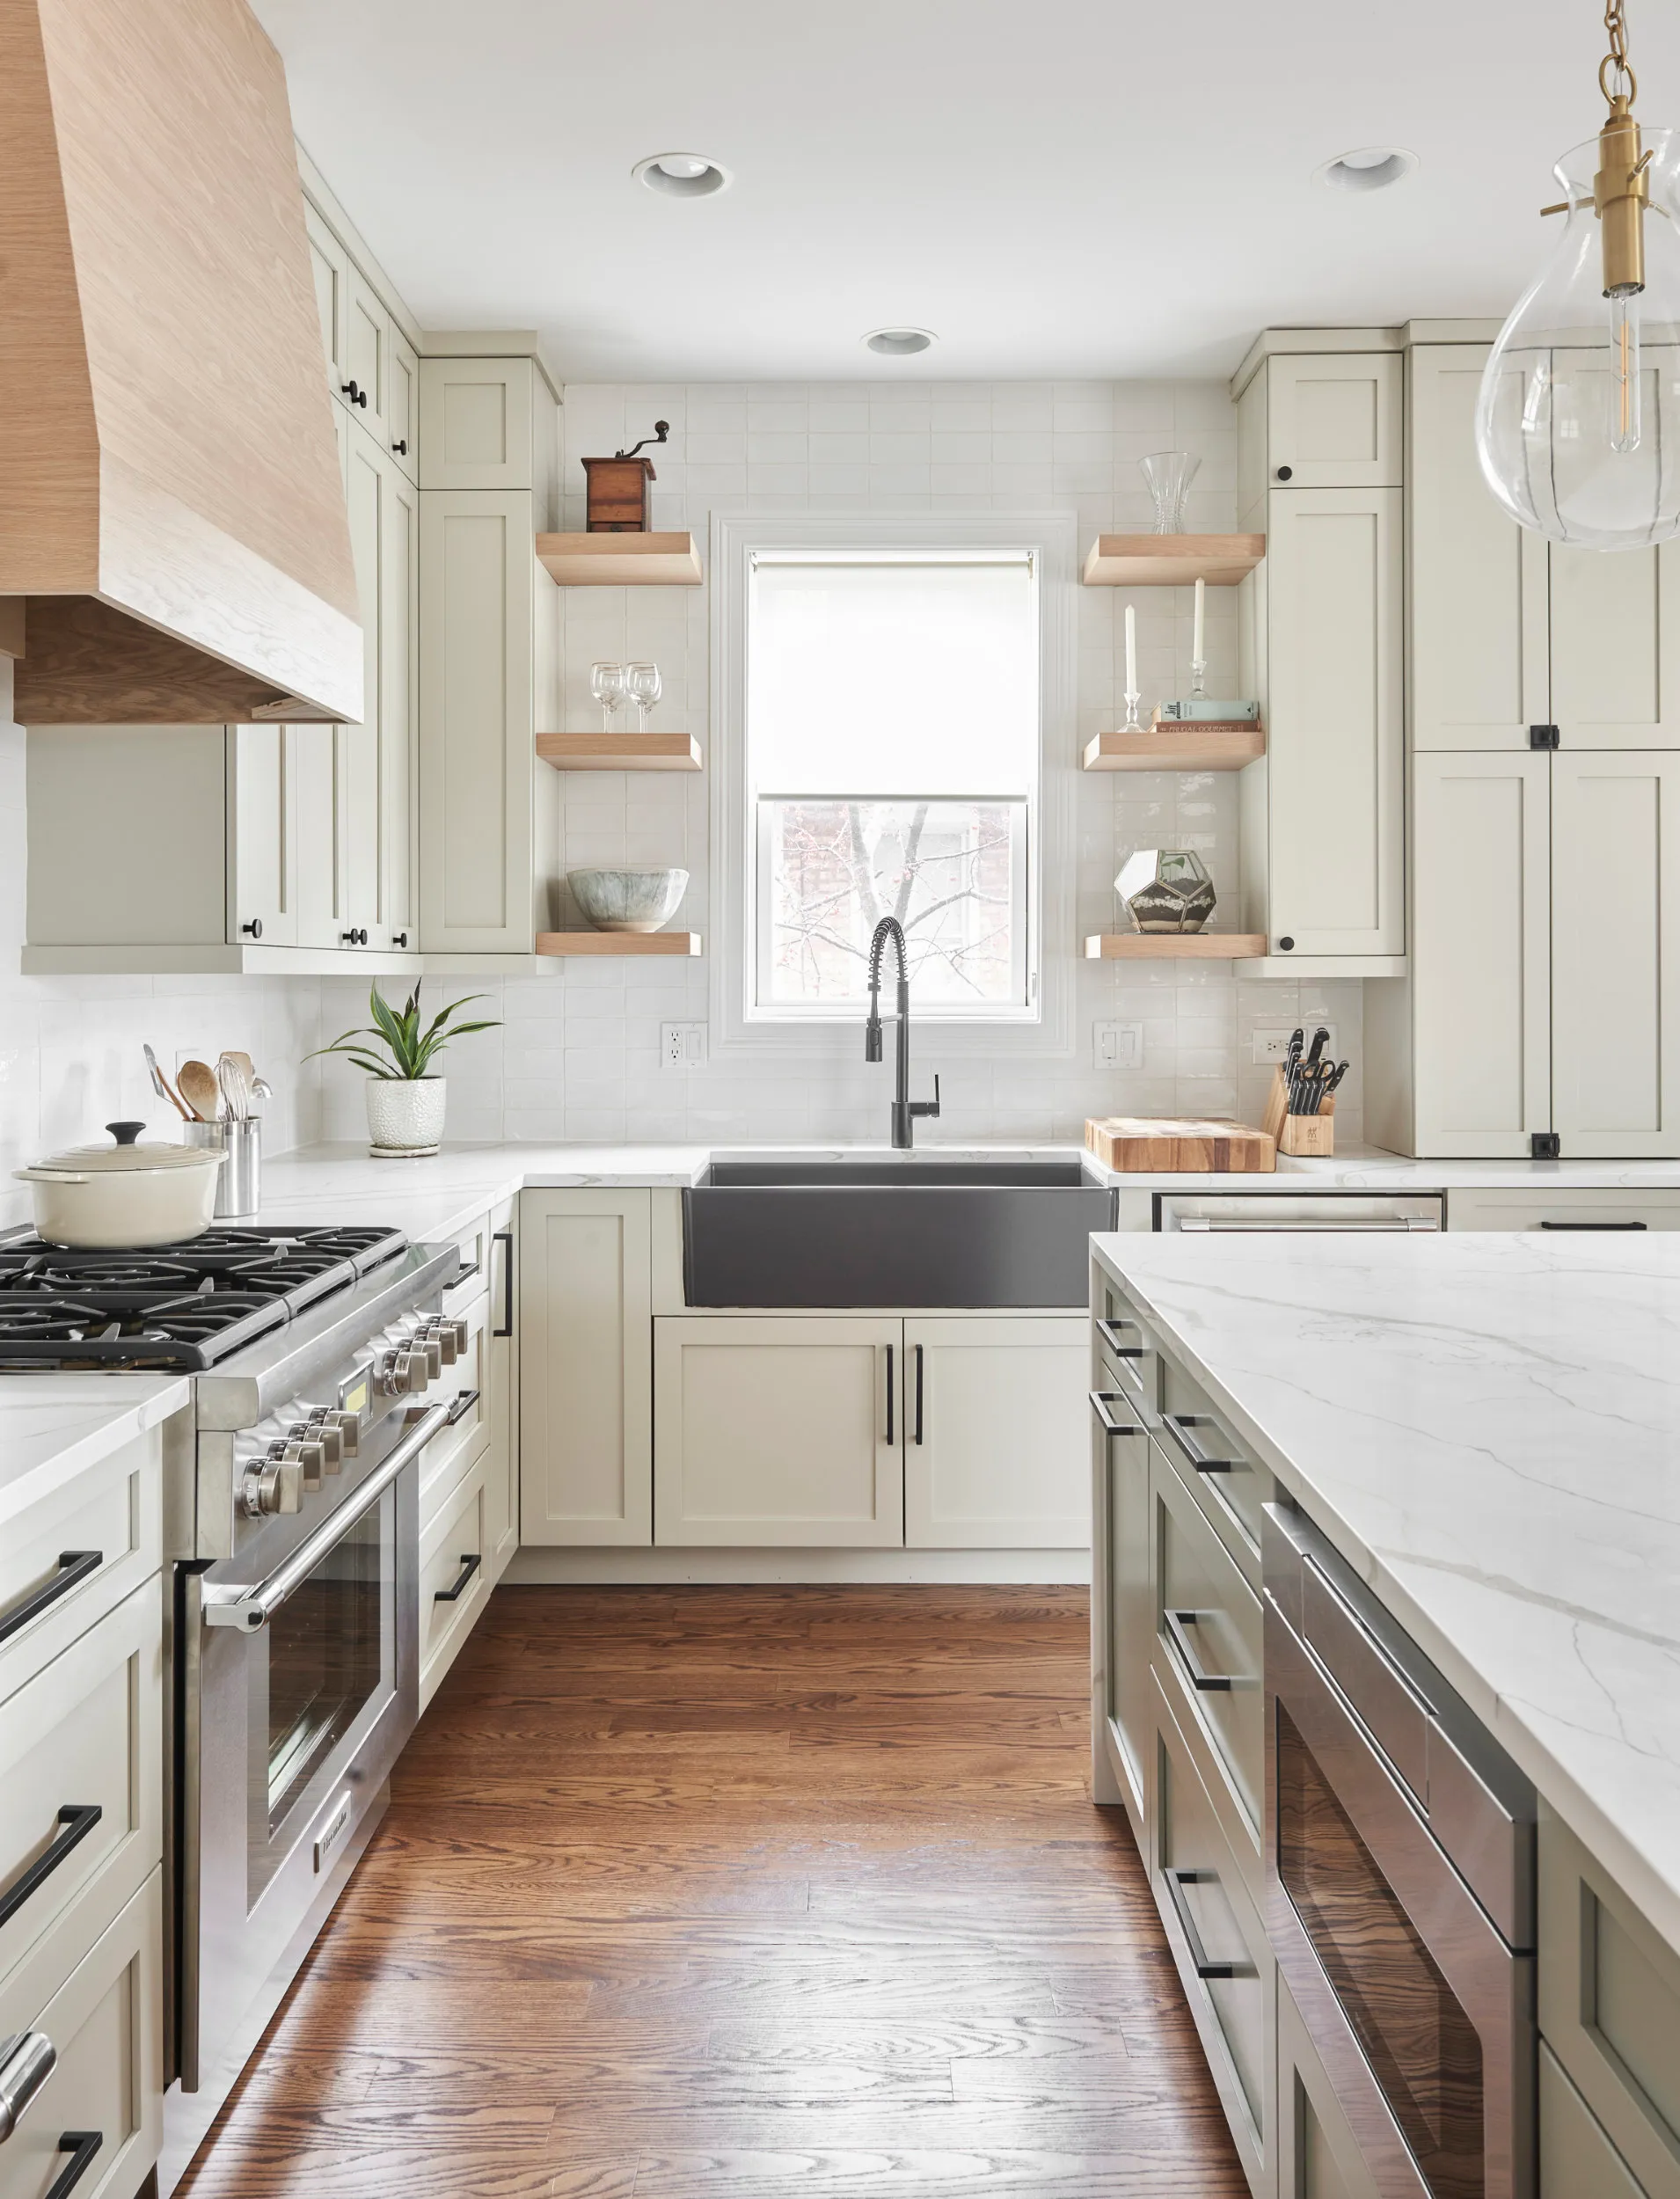 Full kitchen renovation and design